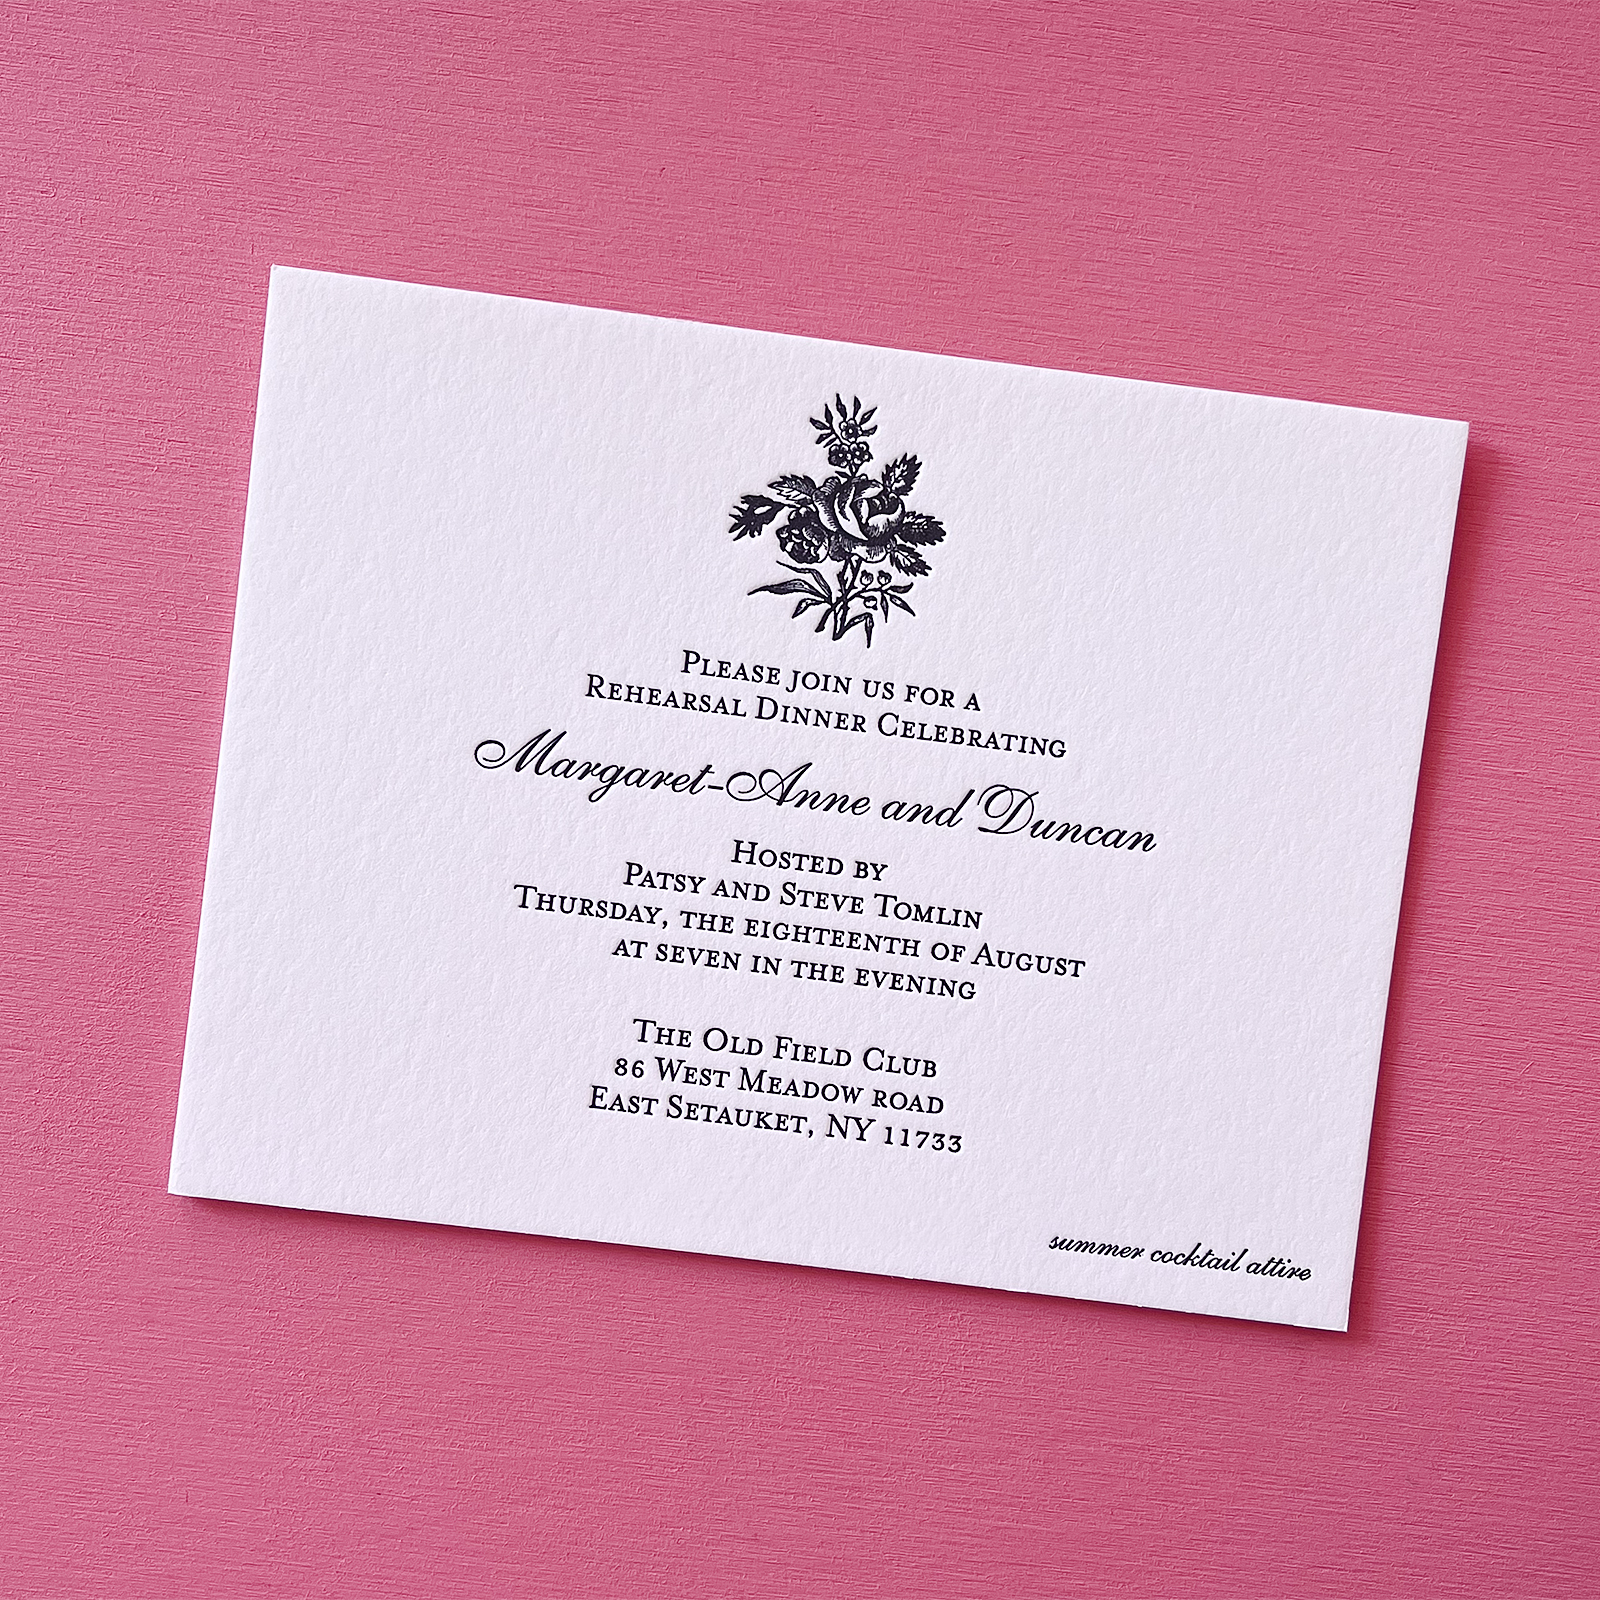 Custom letterpress New York City invitation wedding